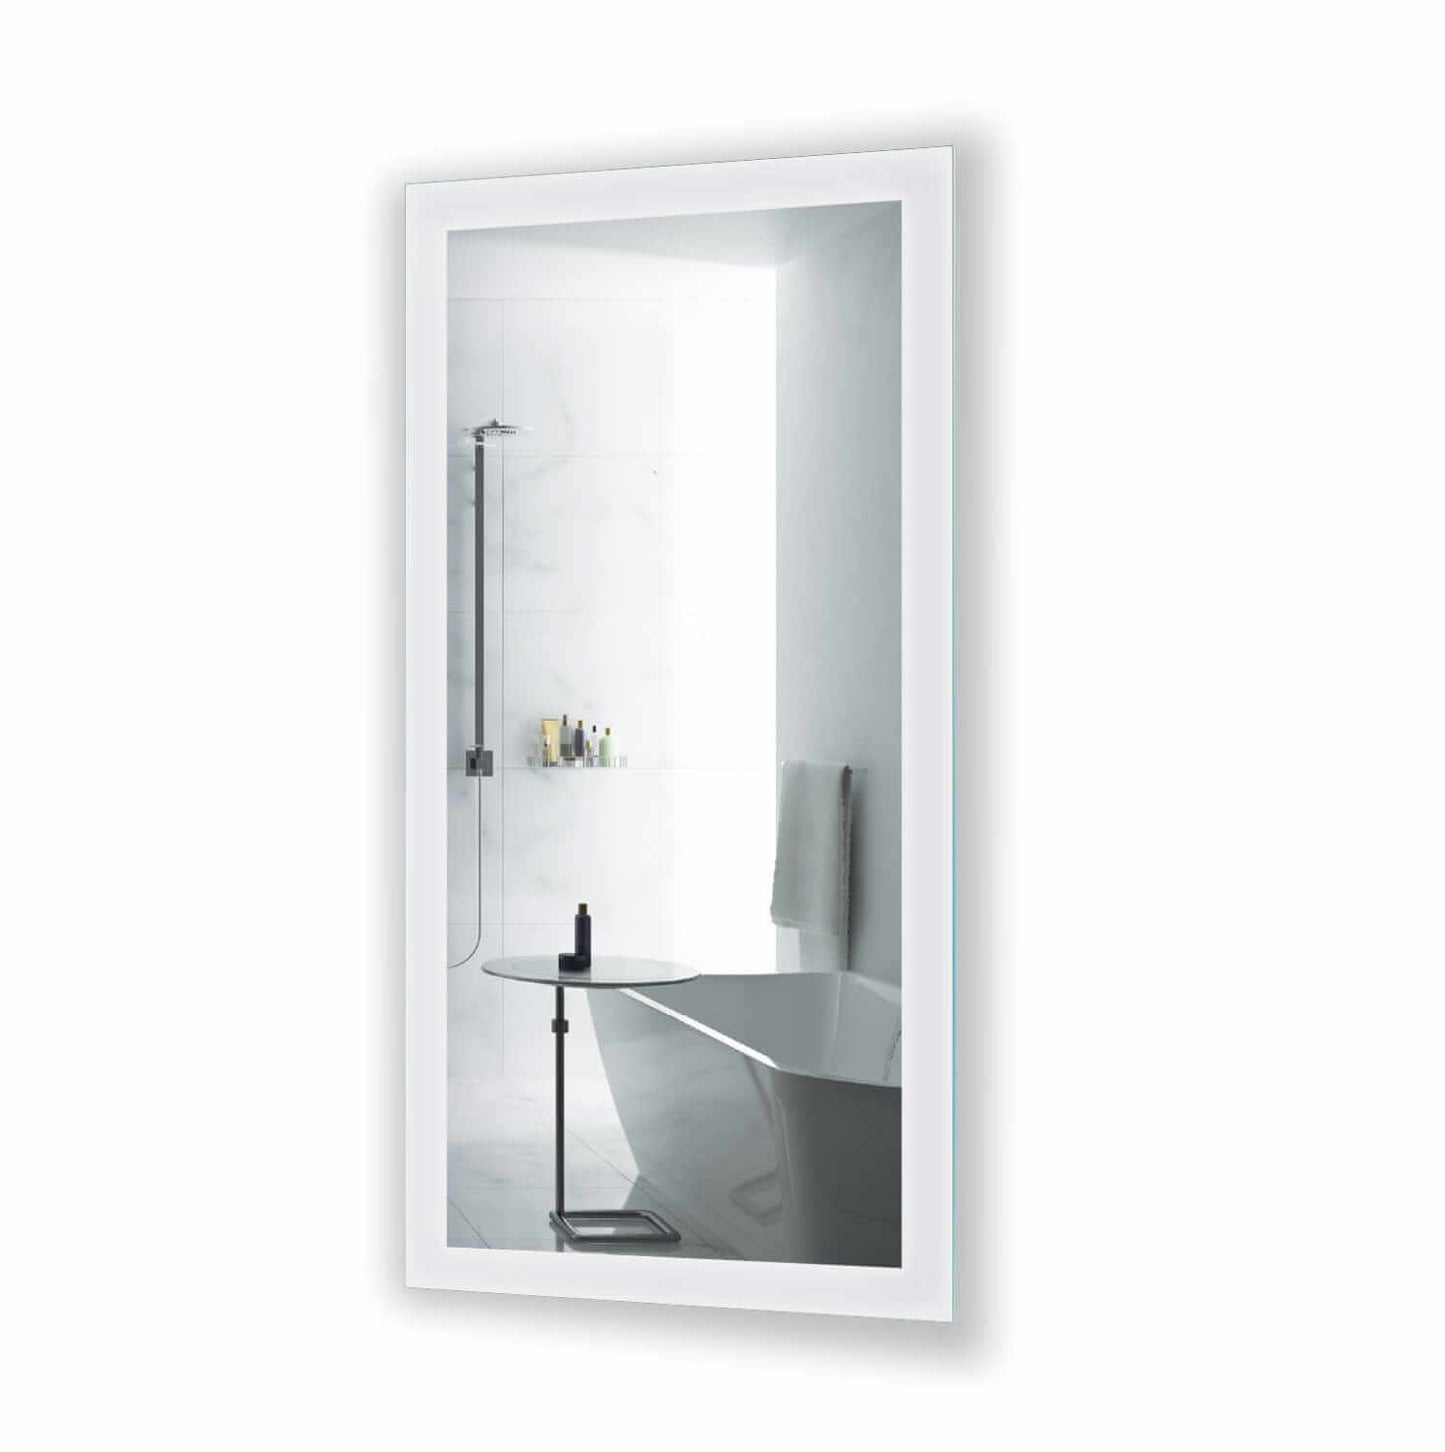 Krugg Bijou 15 X 30 LED mirror with illuminated border in a modern bathroom